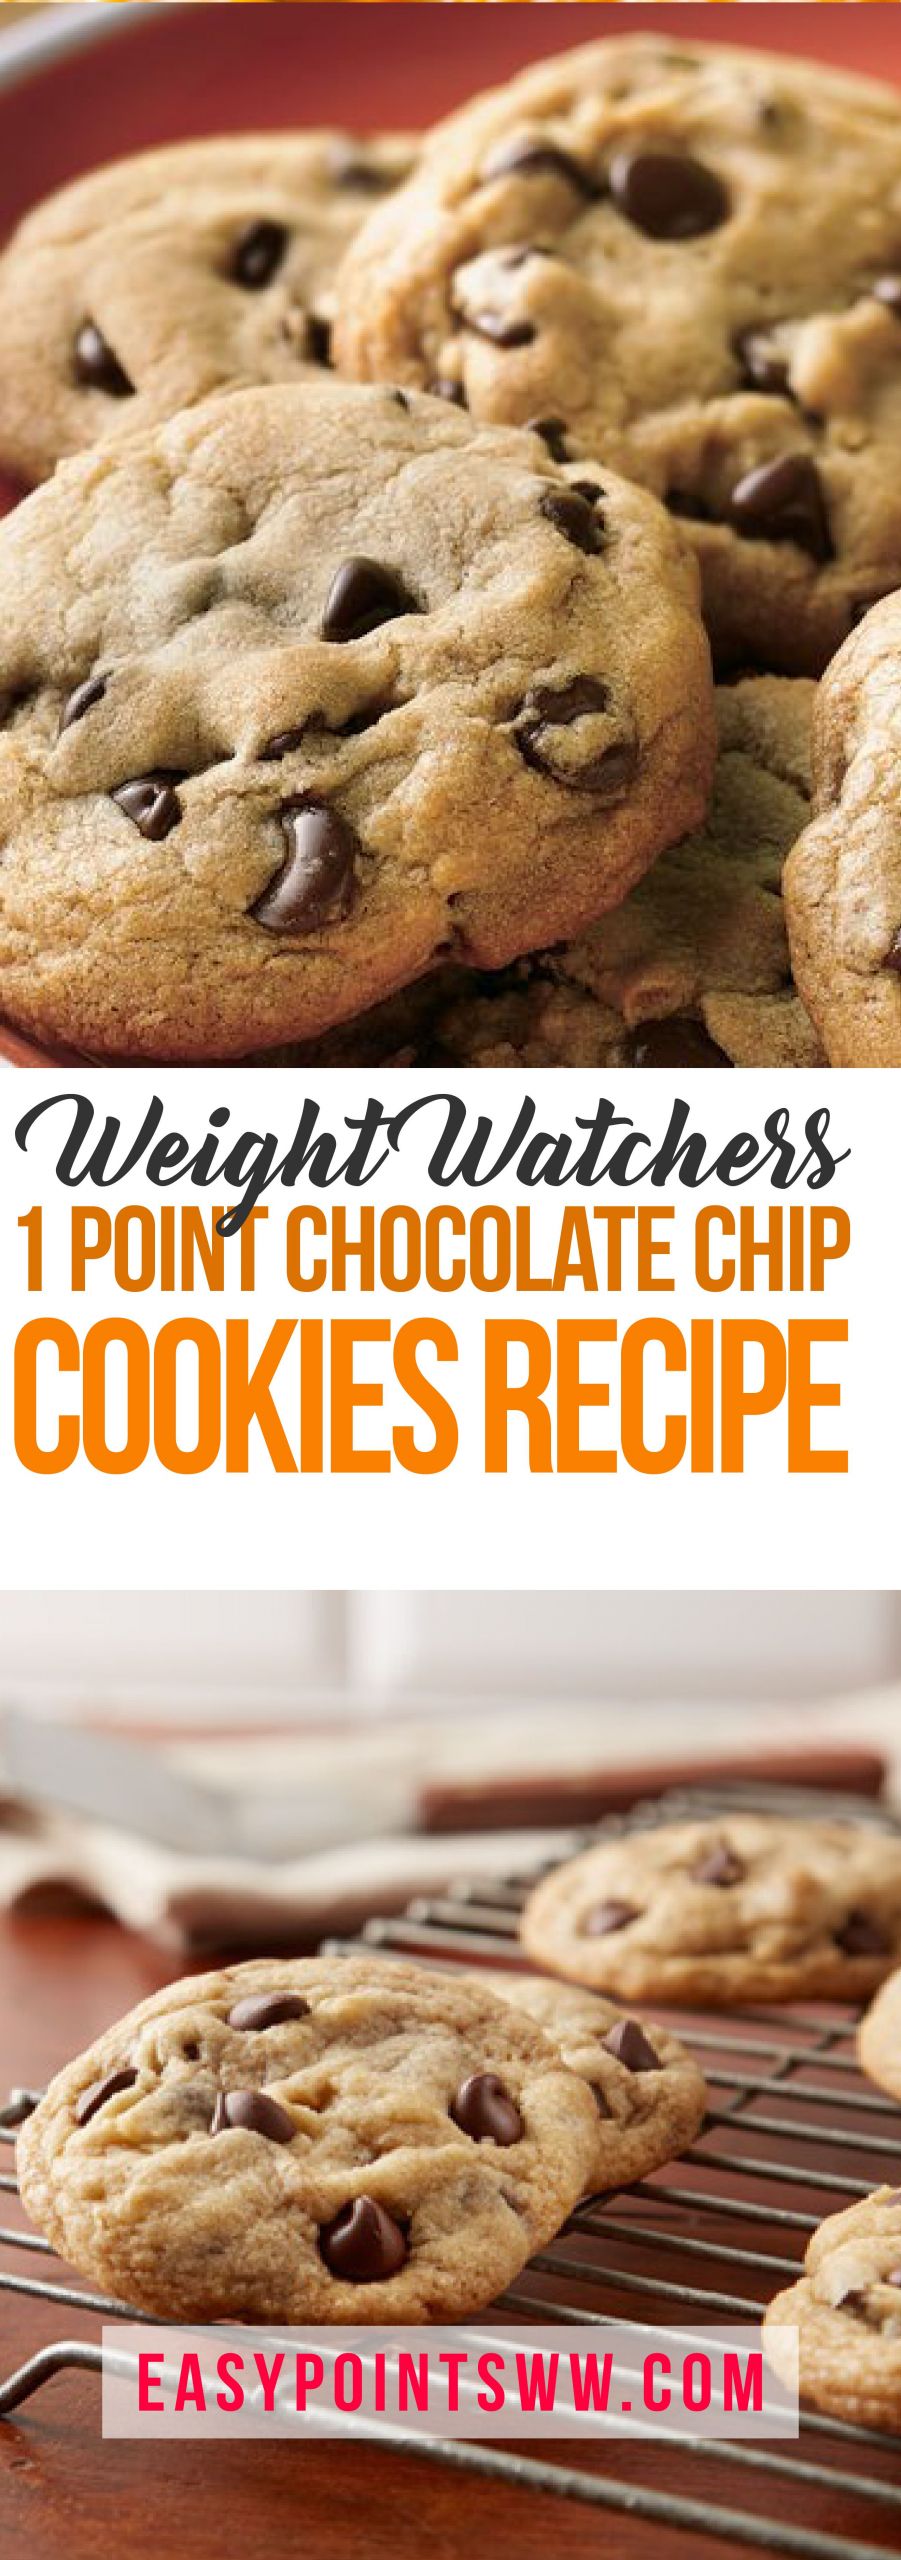 Weight Watcher Chocolate Chip Cookies Recipe
 Pin on Weight Watchers